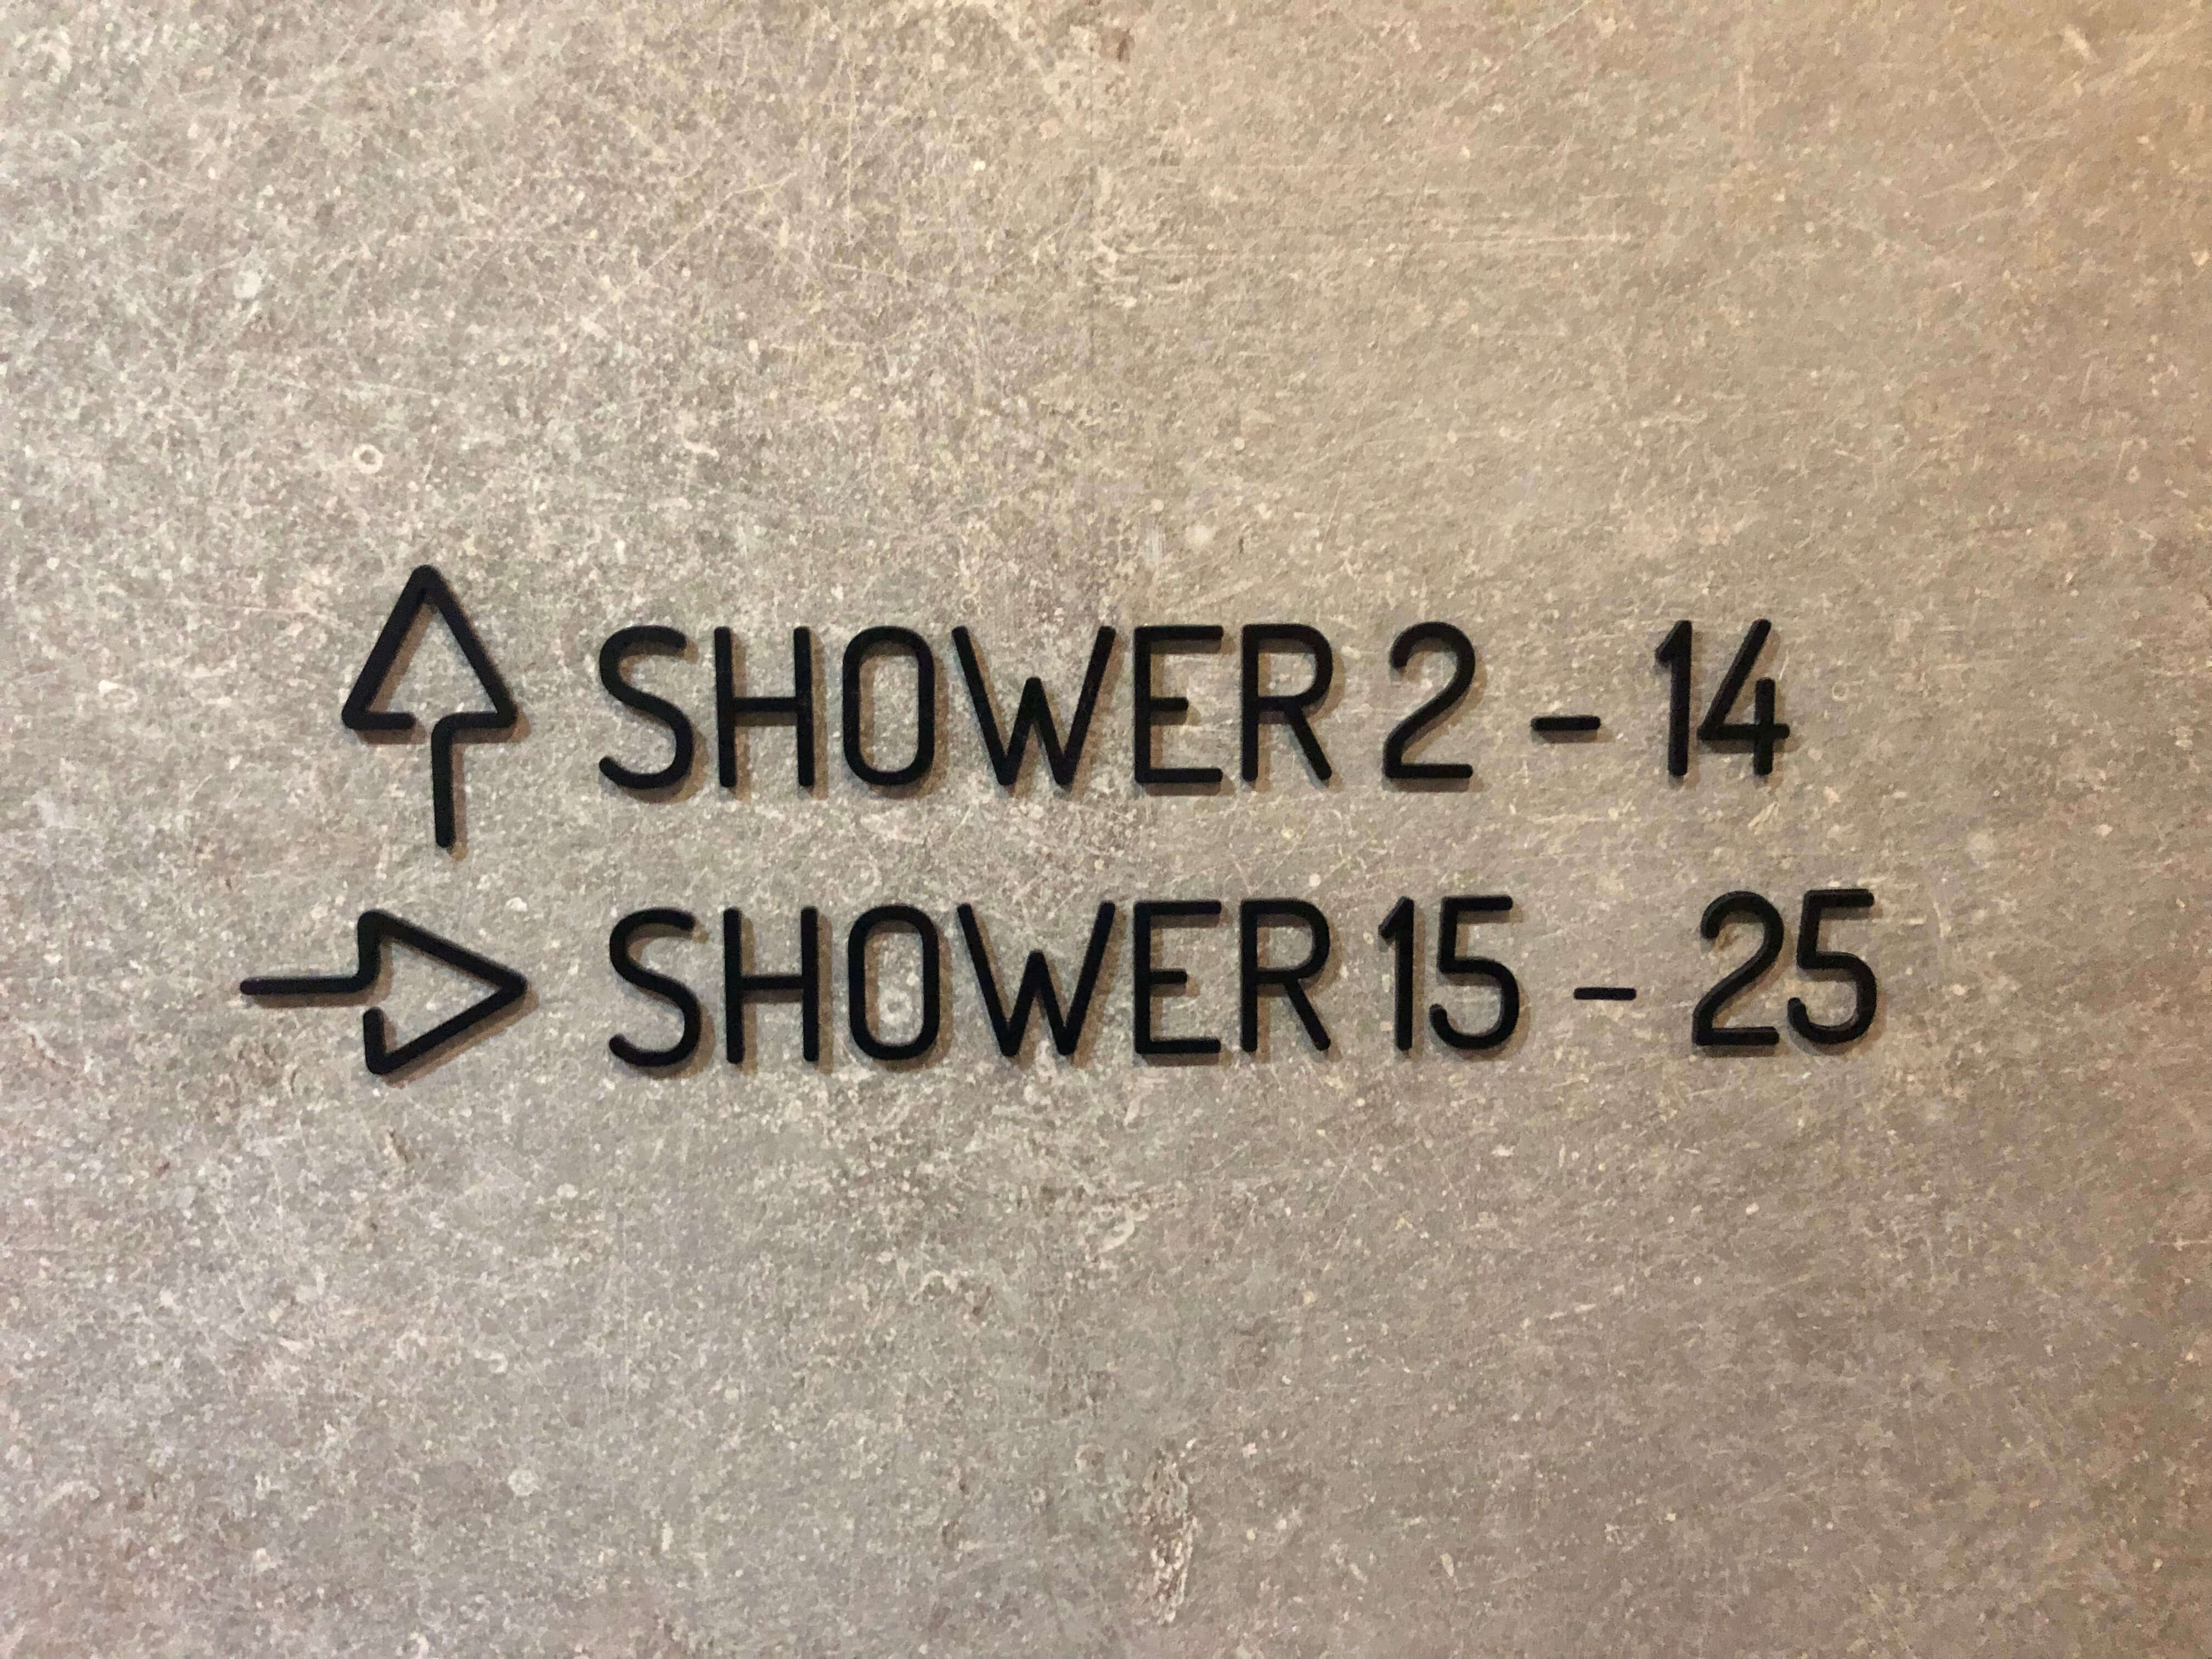 Shower signage Plaza Premium Arrivals Lounge London Heathrow Terminal 4